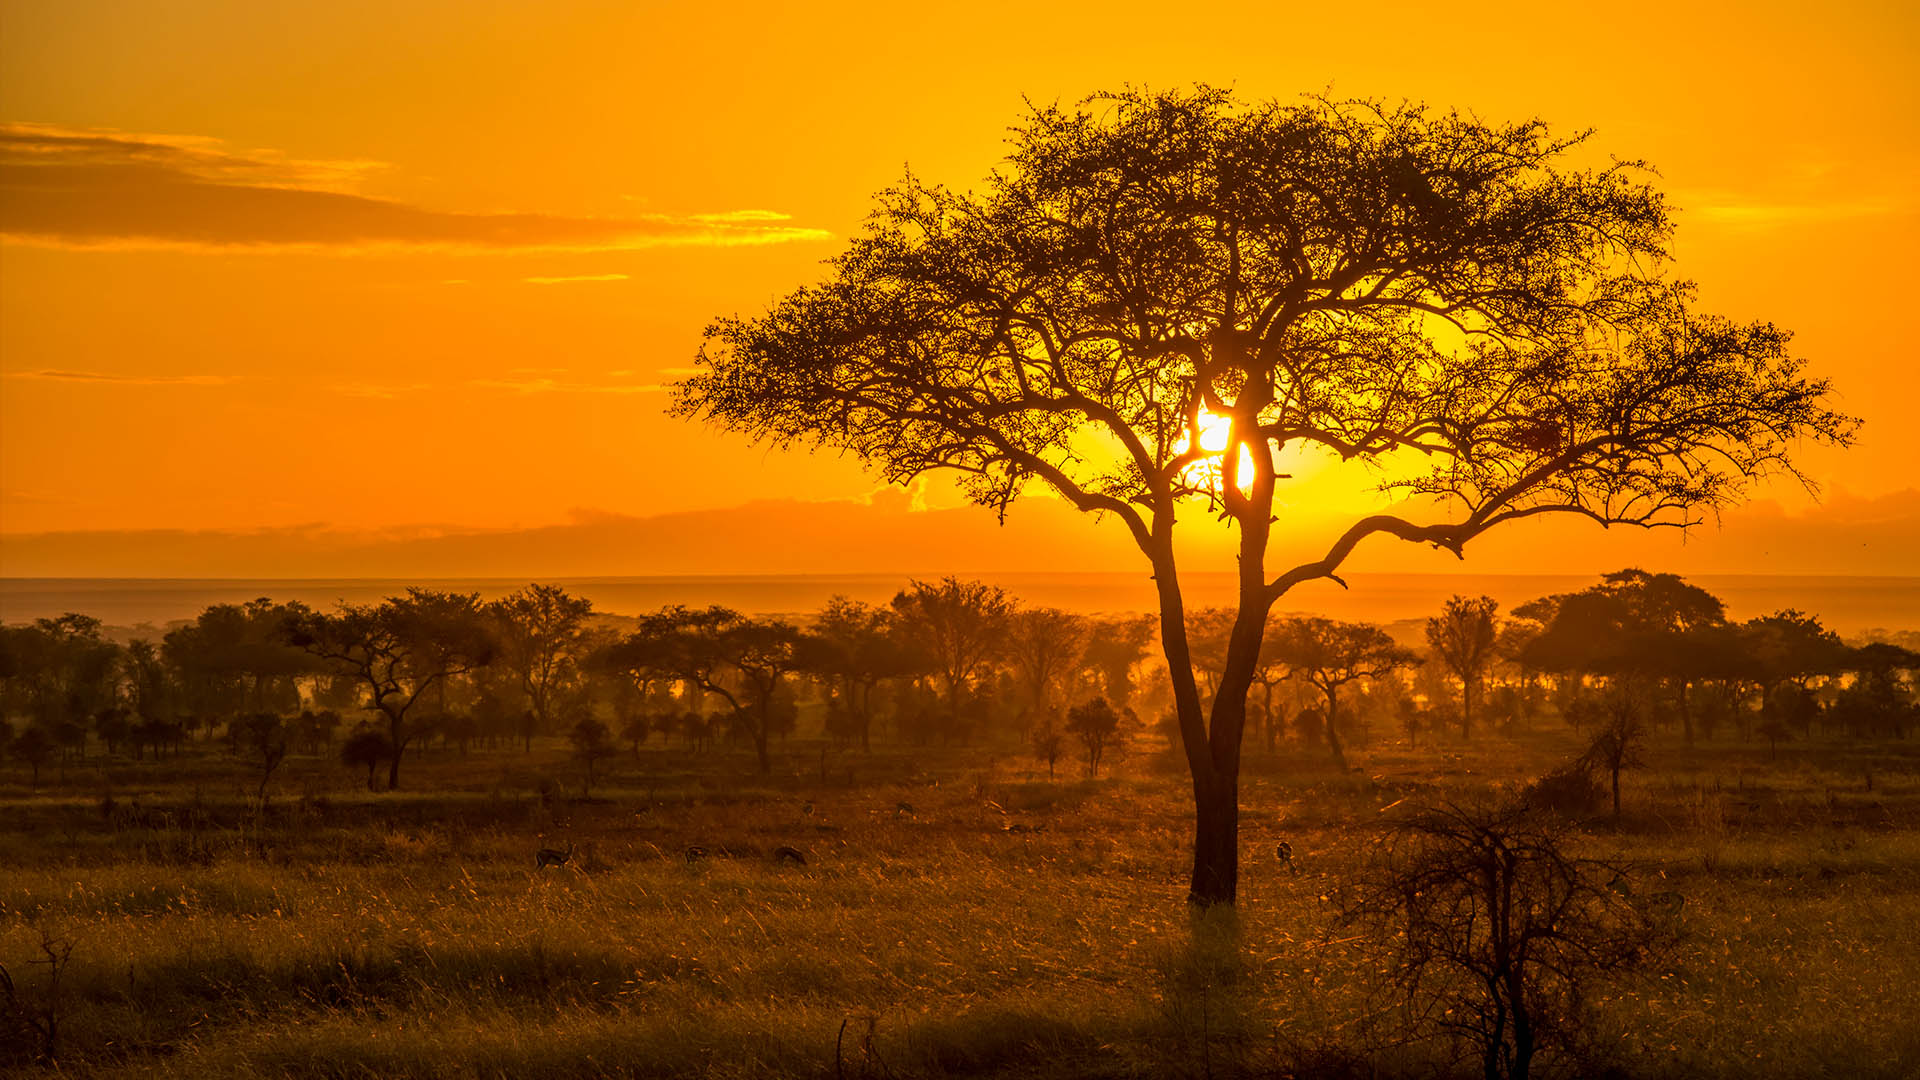 Golden sunset over the savanna in Serengeti National Park, Tanzania ...